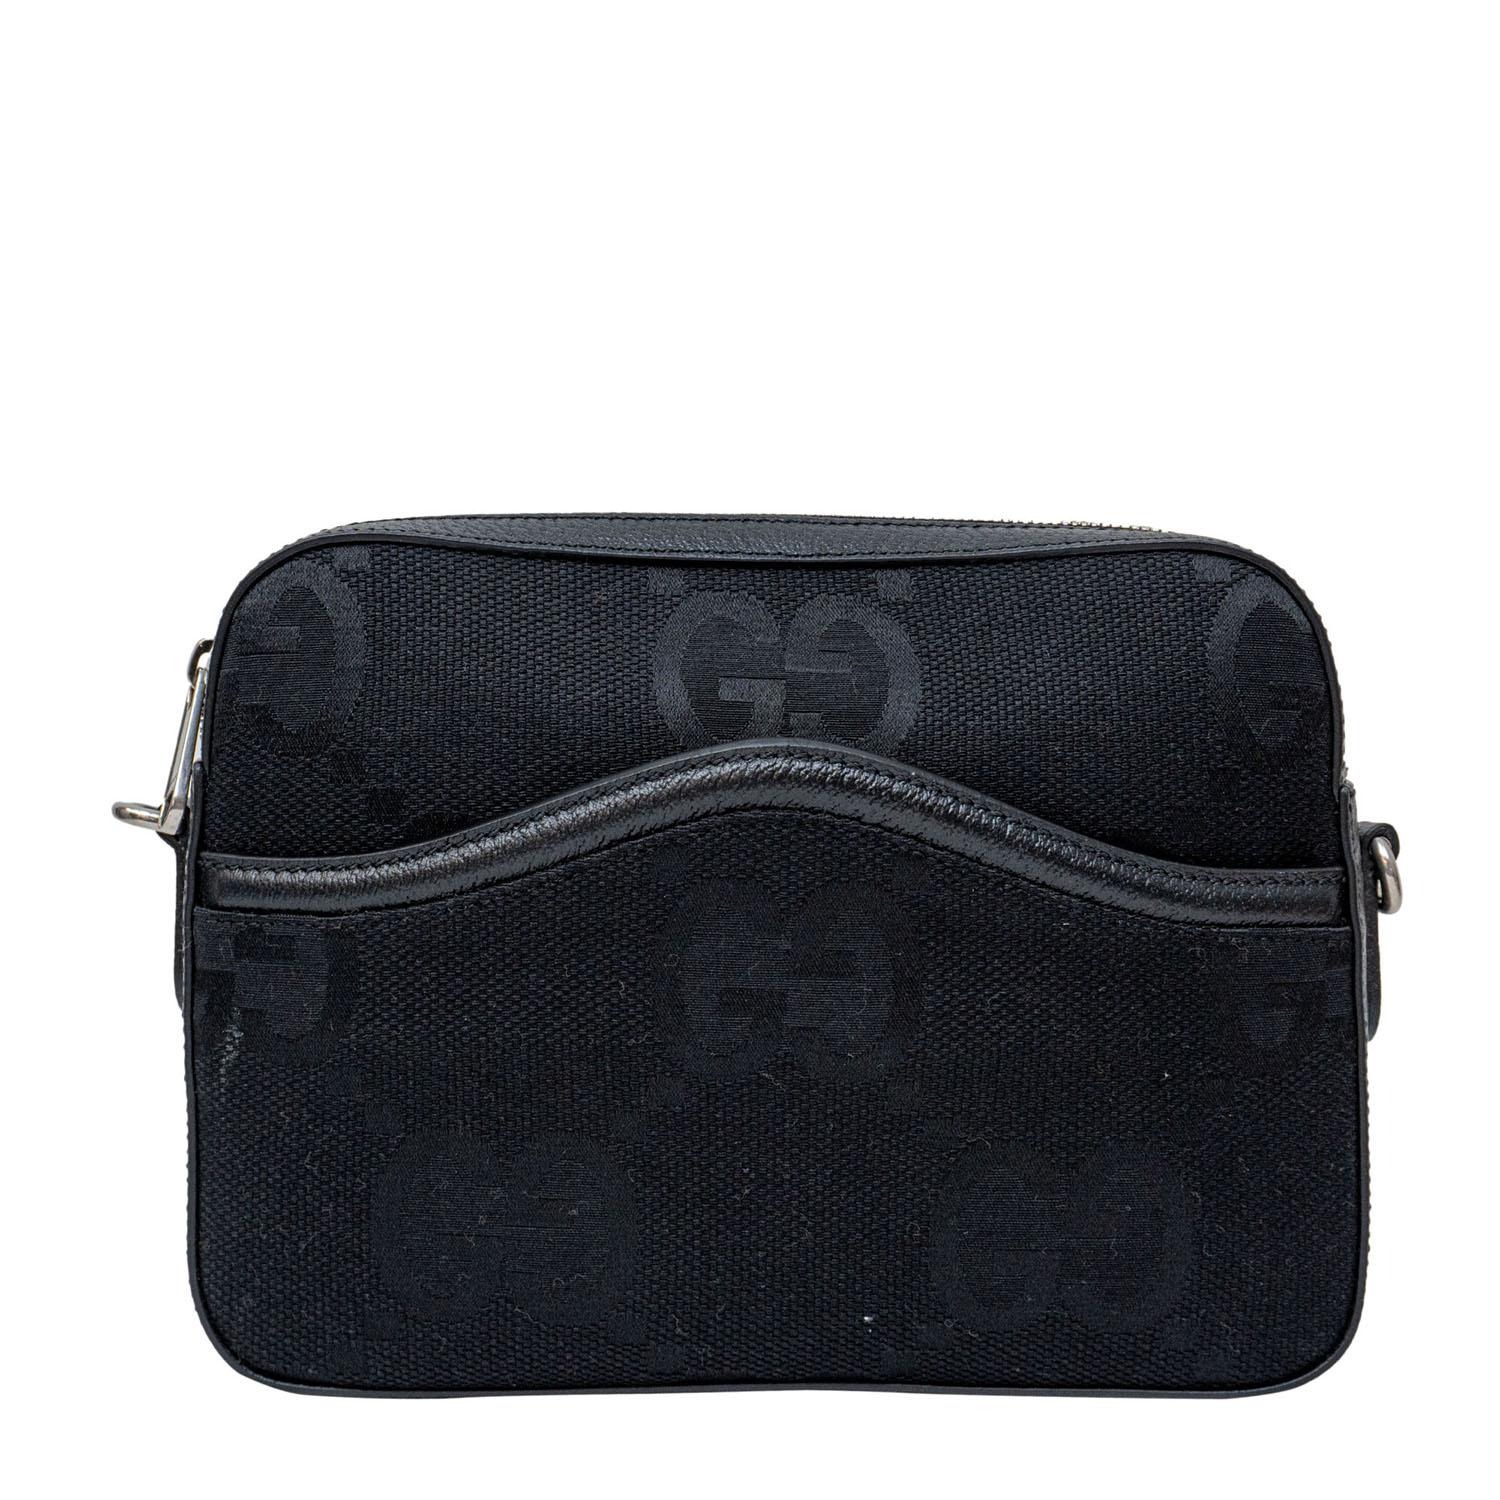 Gucci Black Leather and Logo Canvas Cross Body Handbag 1980s